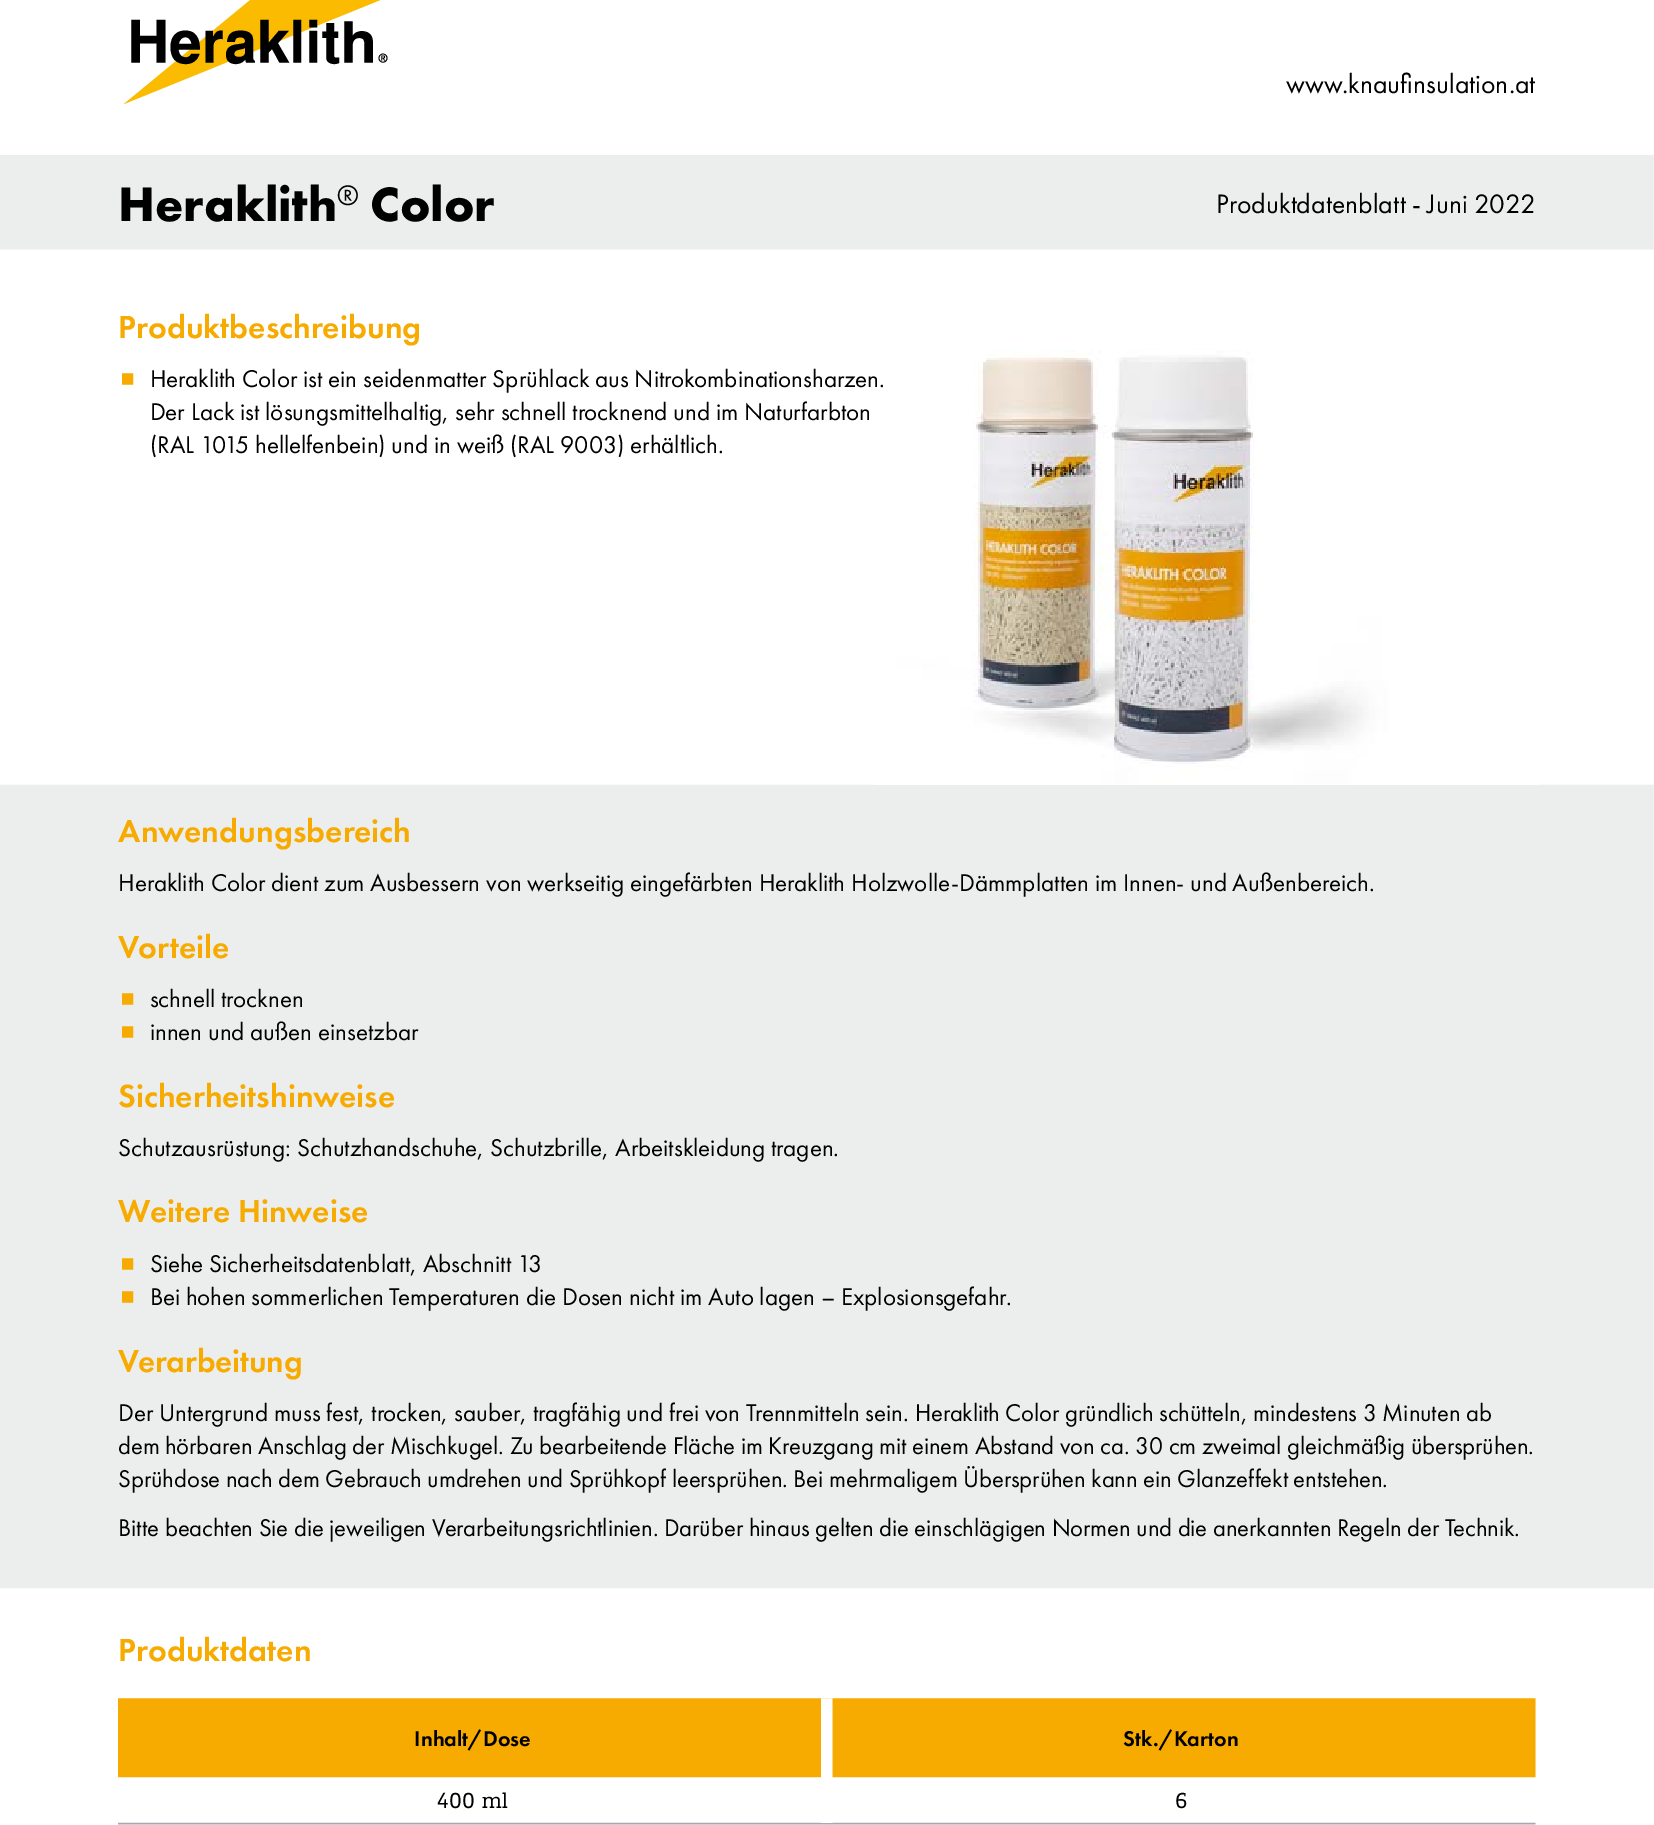 Heraklith Color, Produktdatenblatt